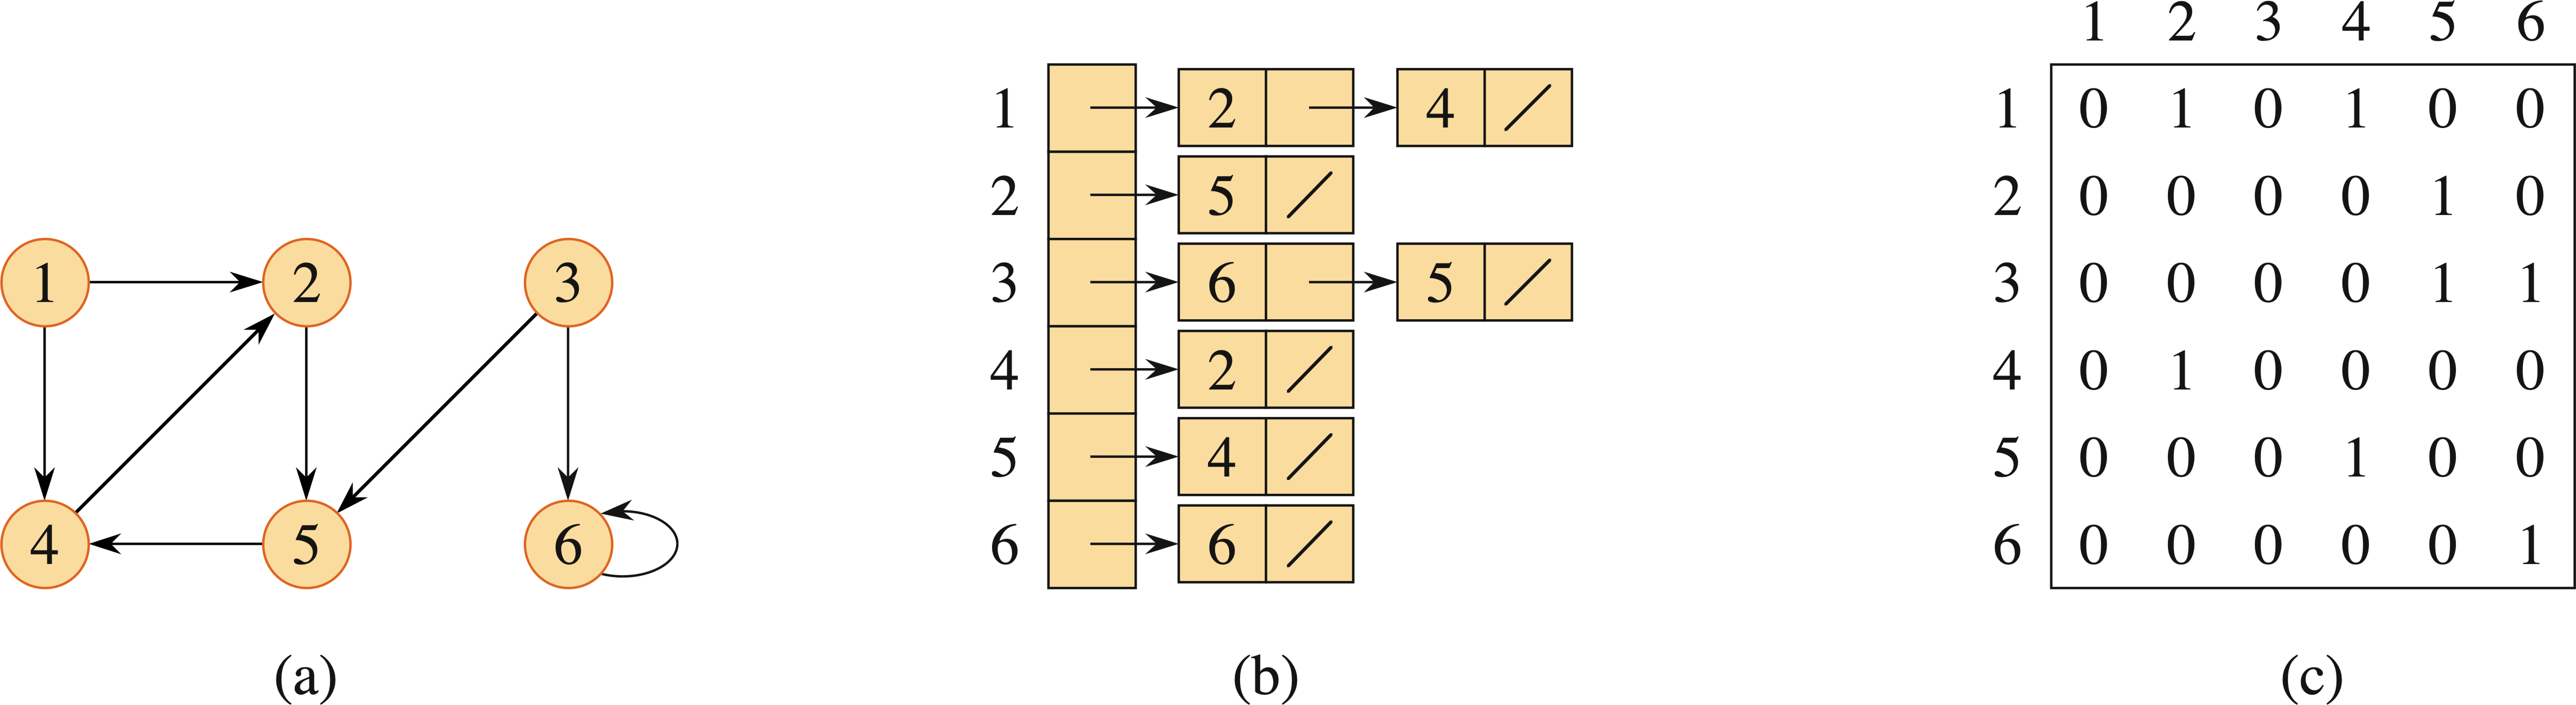 Figure 20.2